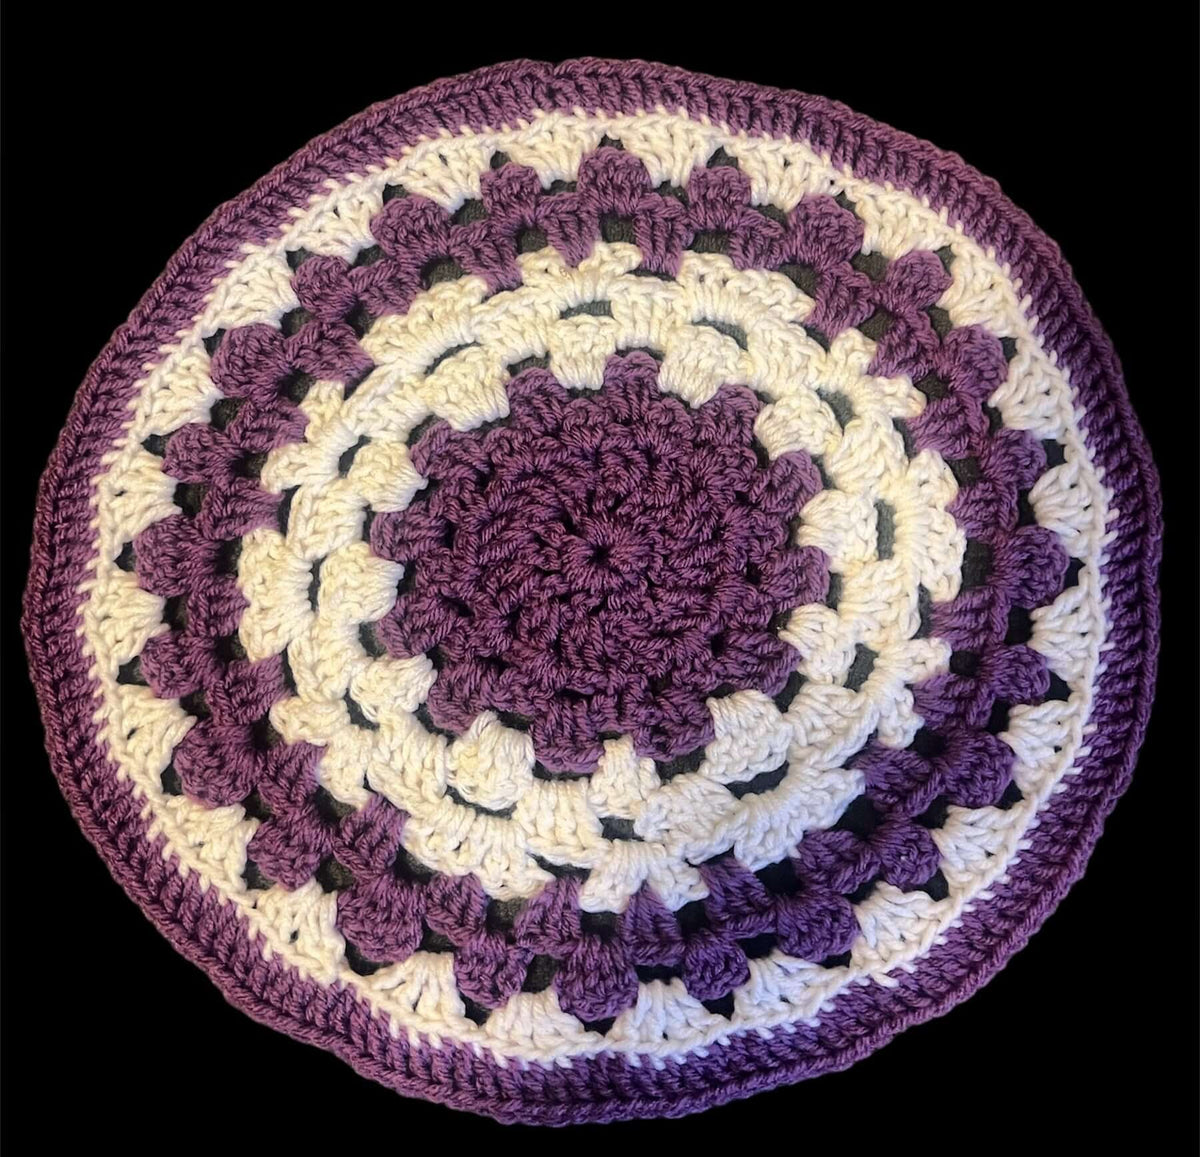 Purple Mandala Doily Stunning Table CenterpiecePurple Mandala Doily,Stunning Table Centerpiece